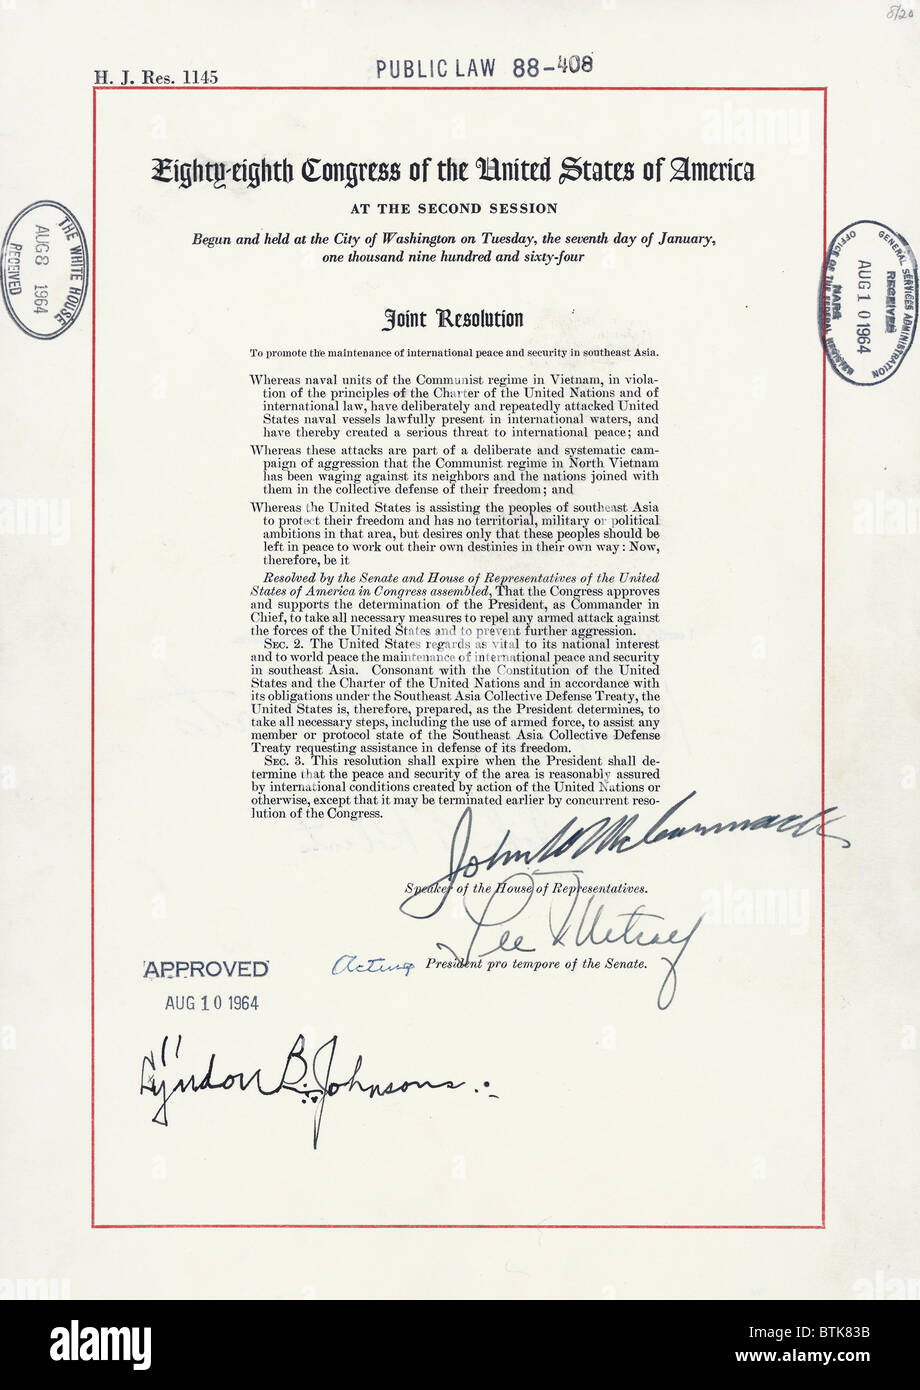 Vietnam War. Tonkin Gulf Resolution, August 7, 1964. This joint resolution of Congress gave President Lyndon Johnson authority to increase U.S. involvement in the Vietnam War. Stock Photo